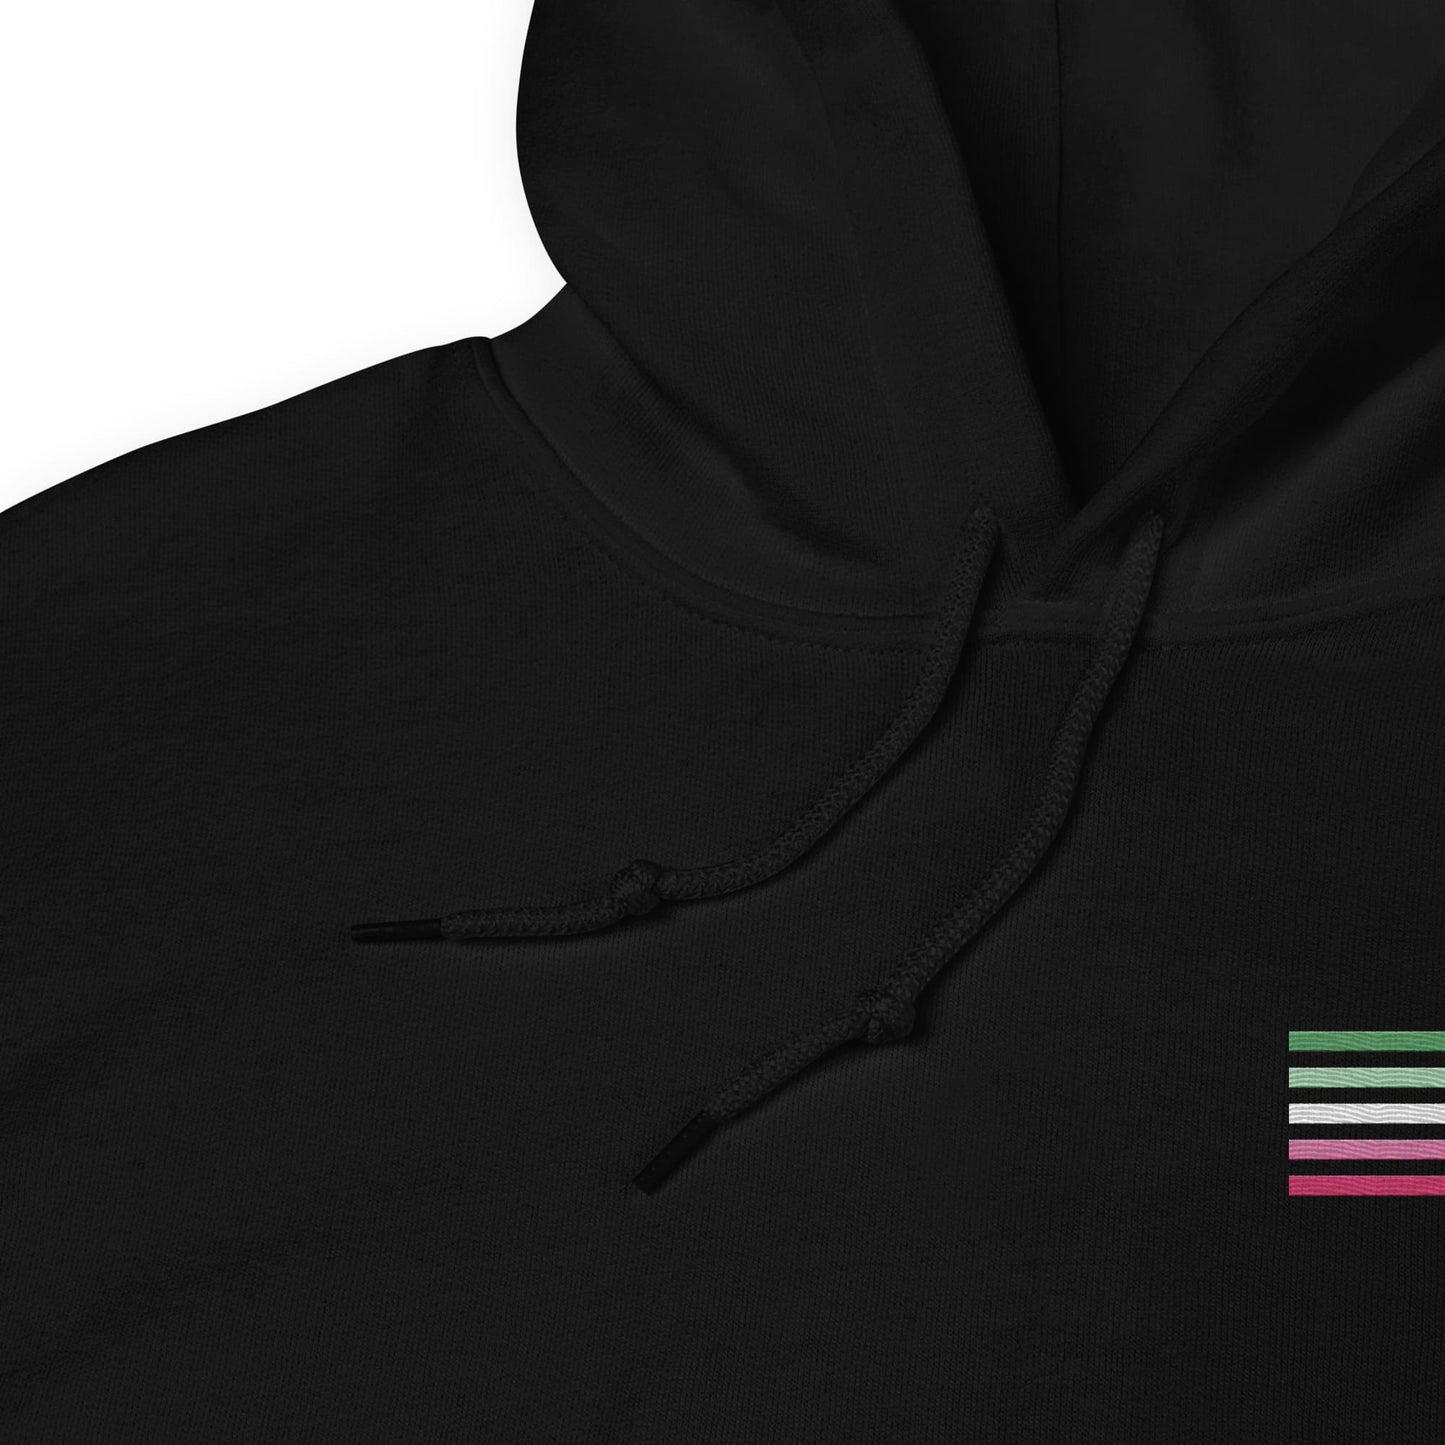 abrosexual hoodie, subtle abro pride flag embroidered pocket design hooded sweatshirt, detail strings